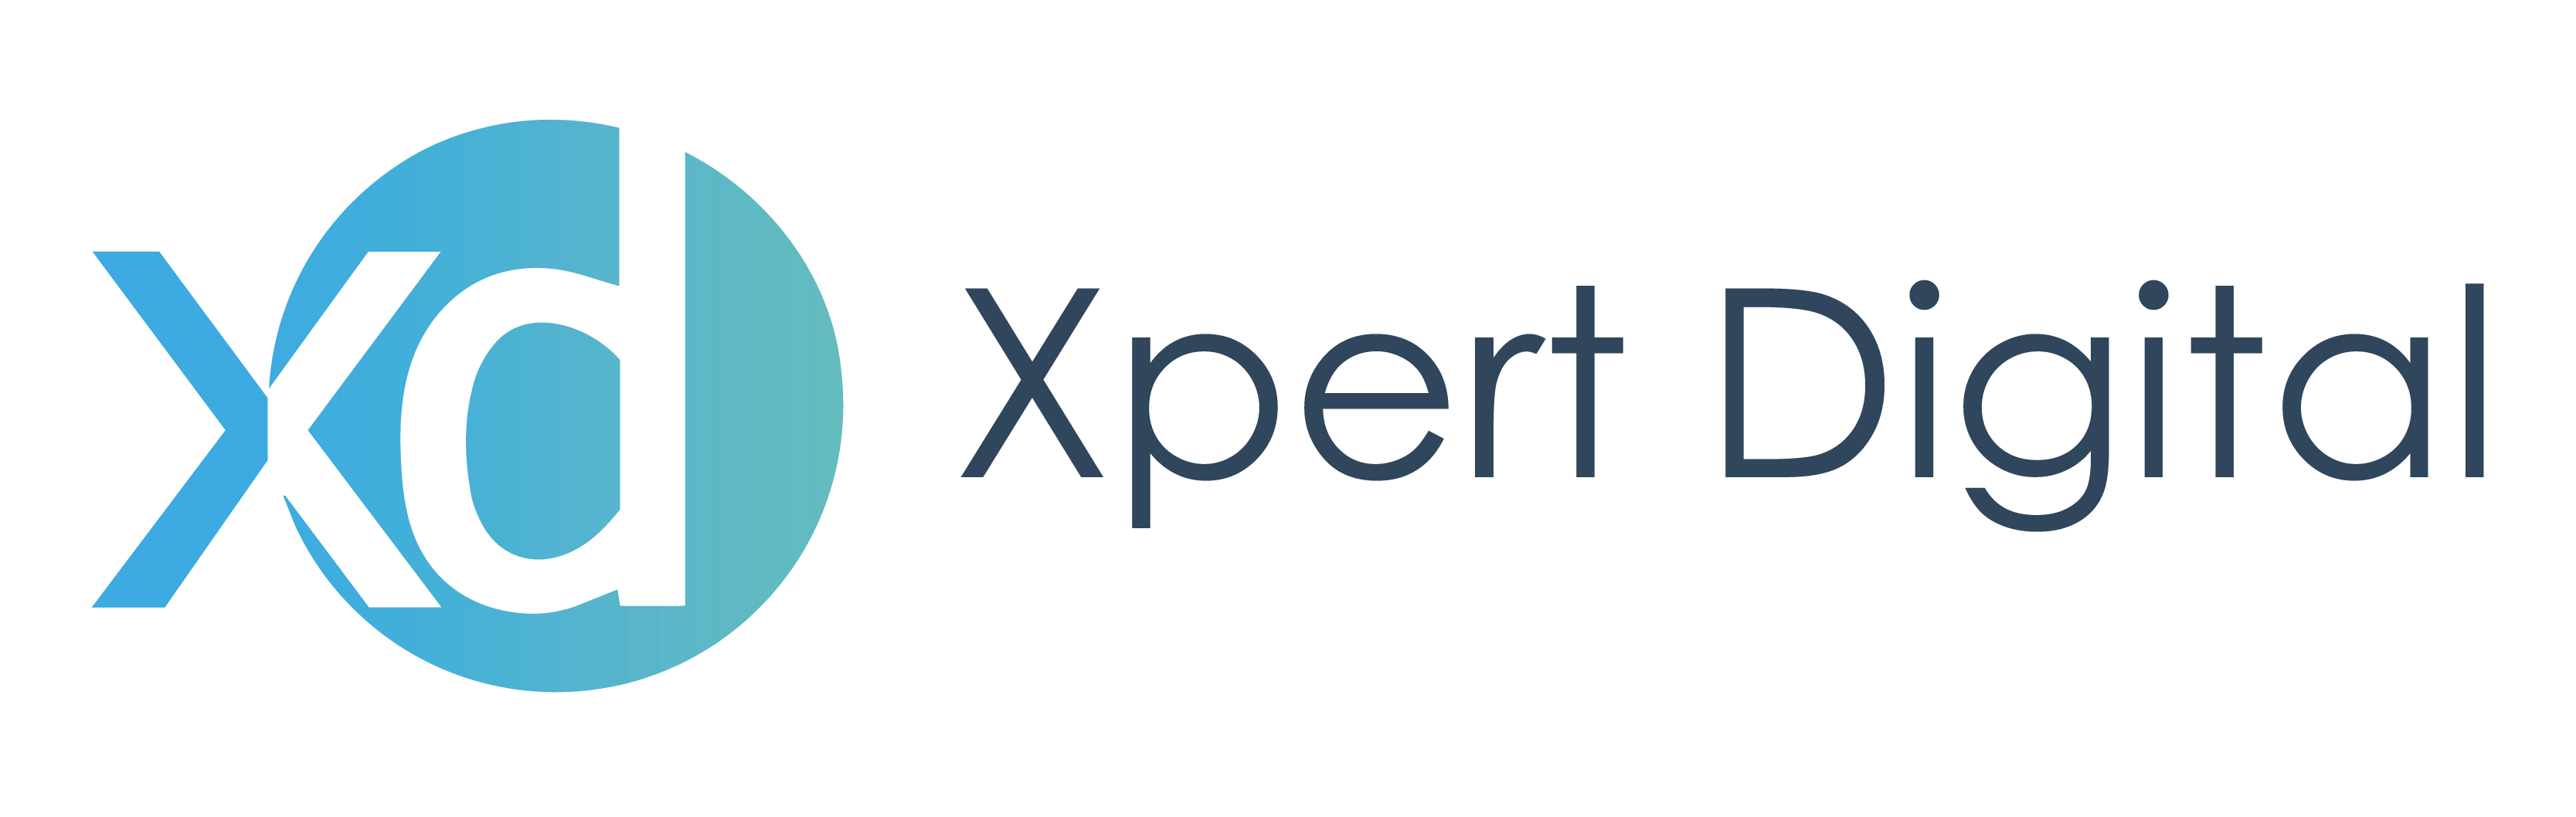 Xpert Digital_Logo_cmyk-01 (4)